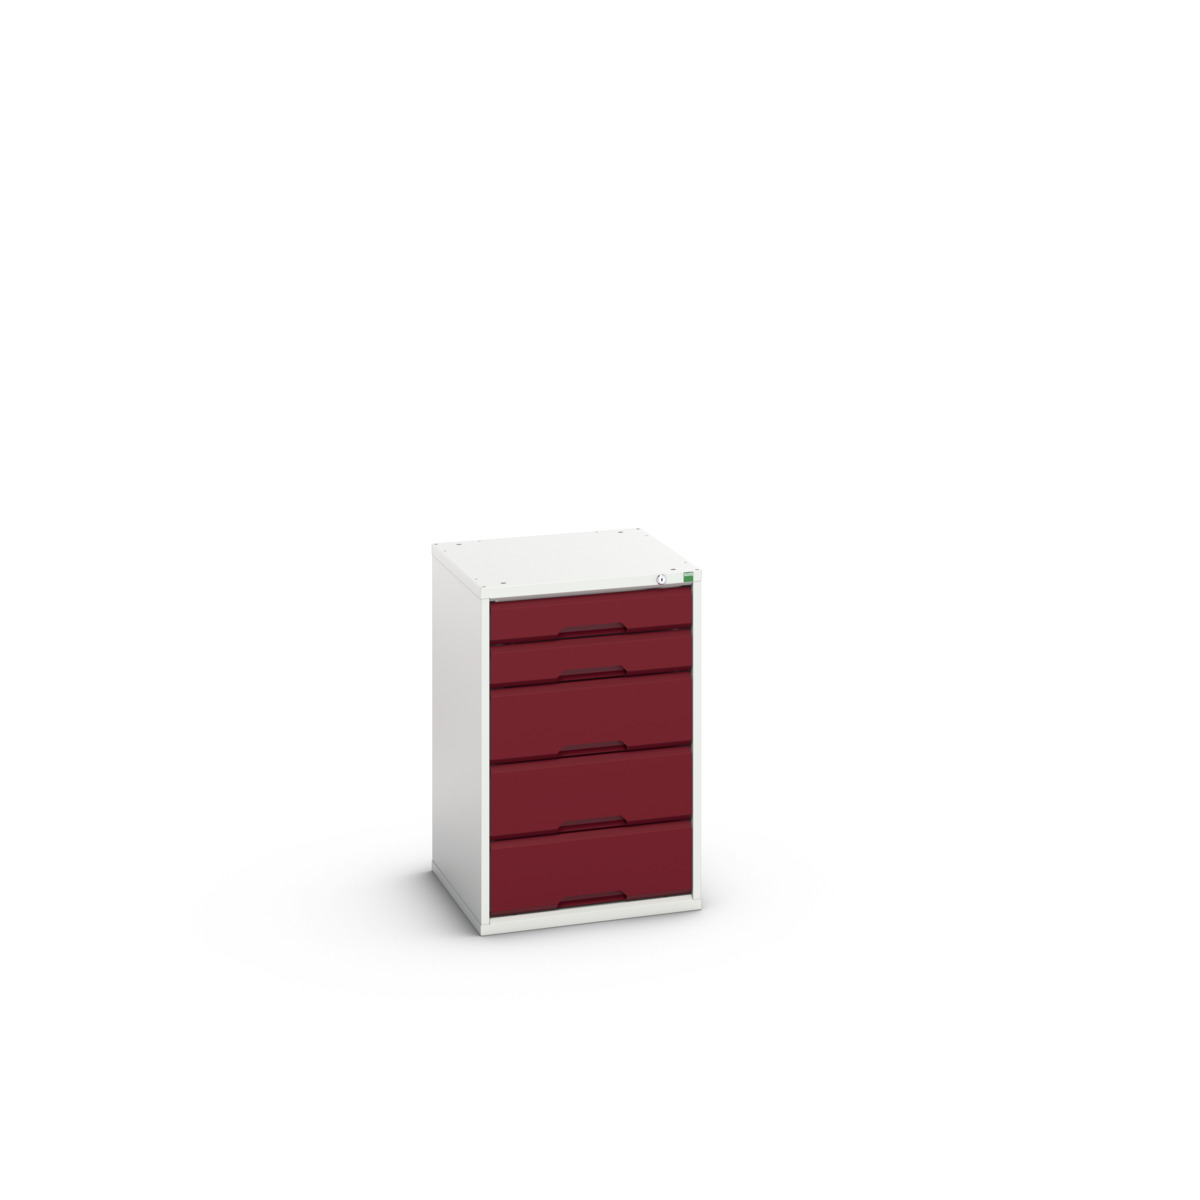 16925312.24 - verso drawer cabinet